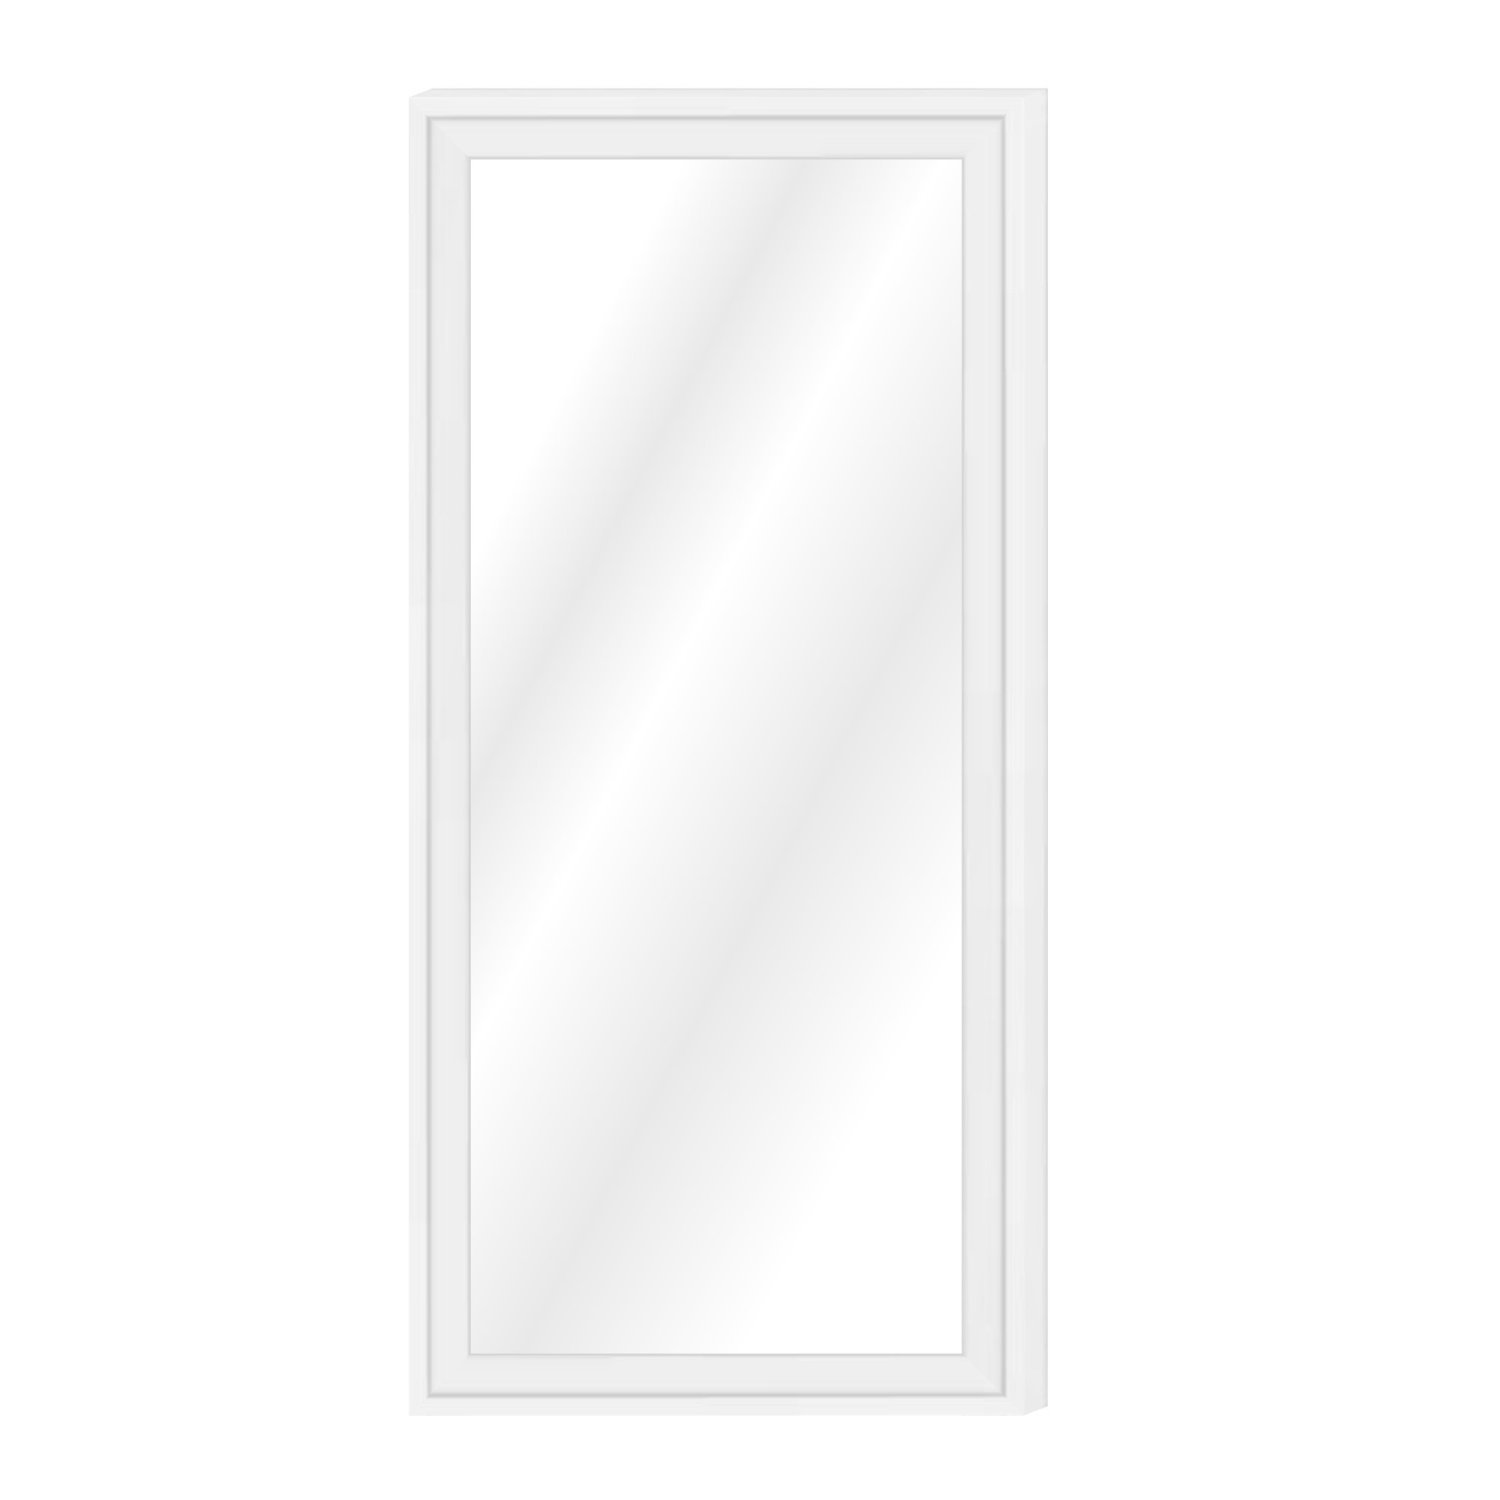 Espelho Elegant 150br 70cm X 150cm - 5